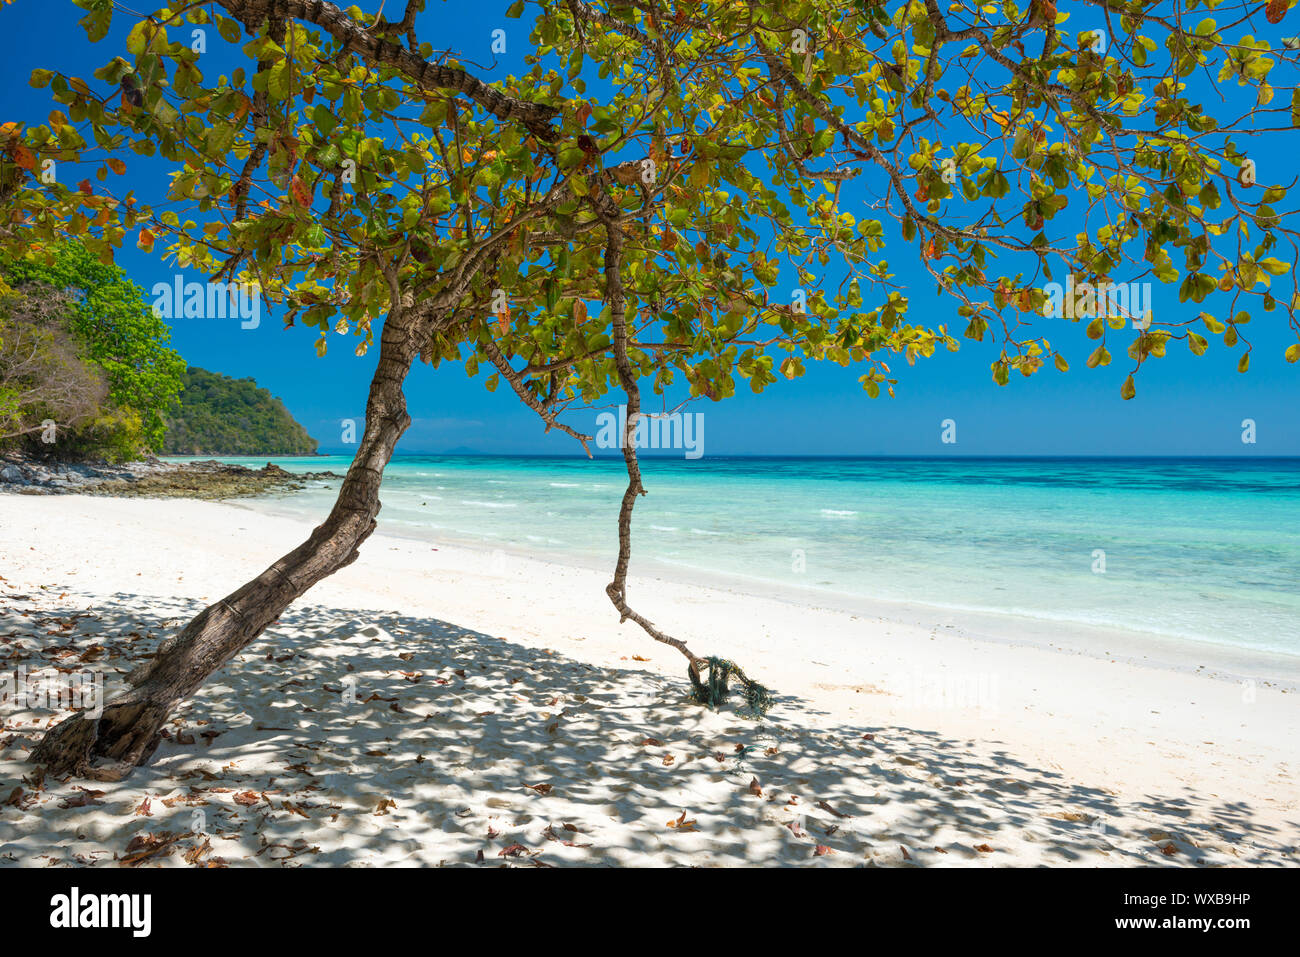 Beautiful beach at tropical island Stock Photo